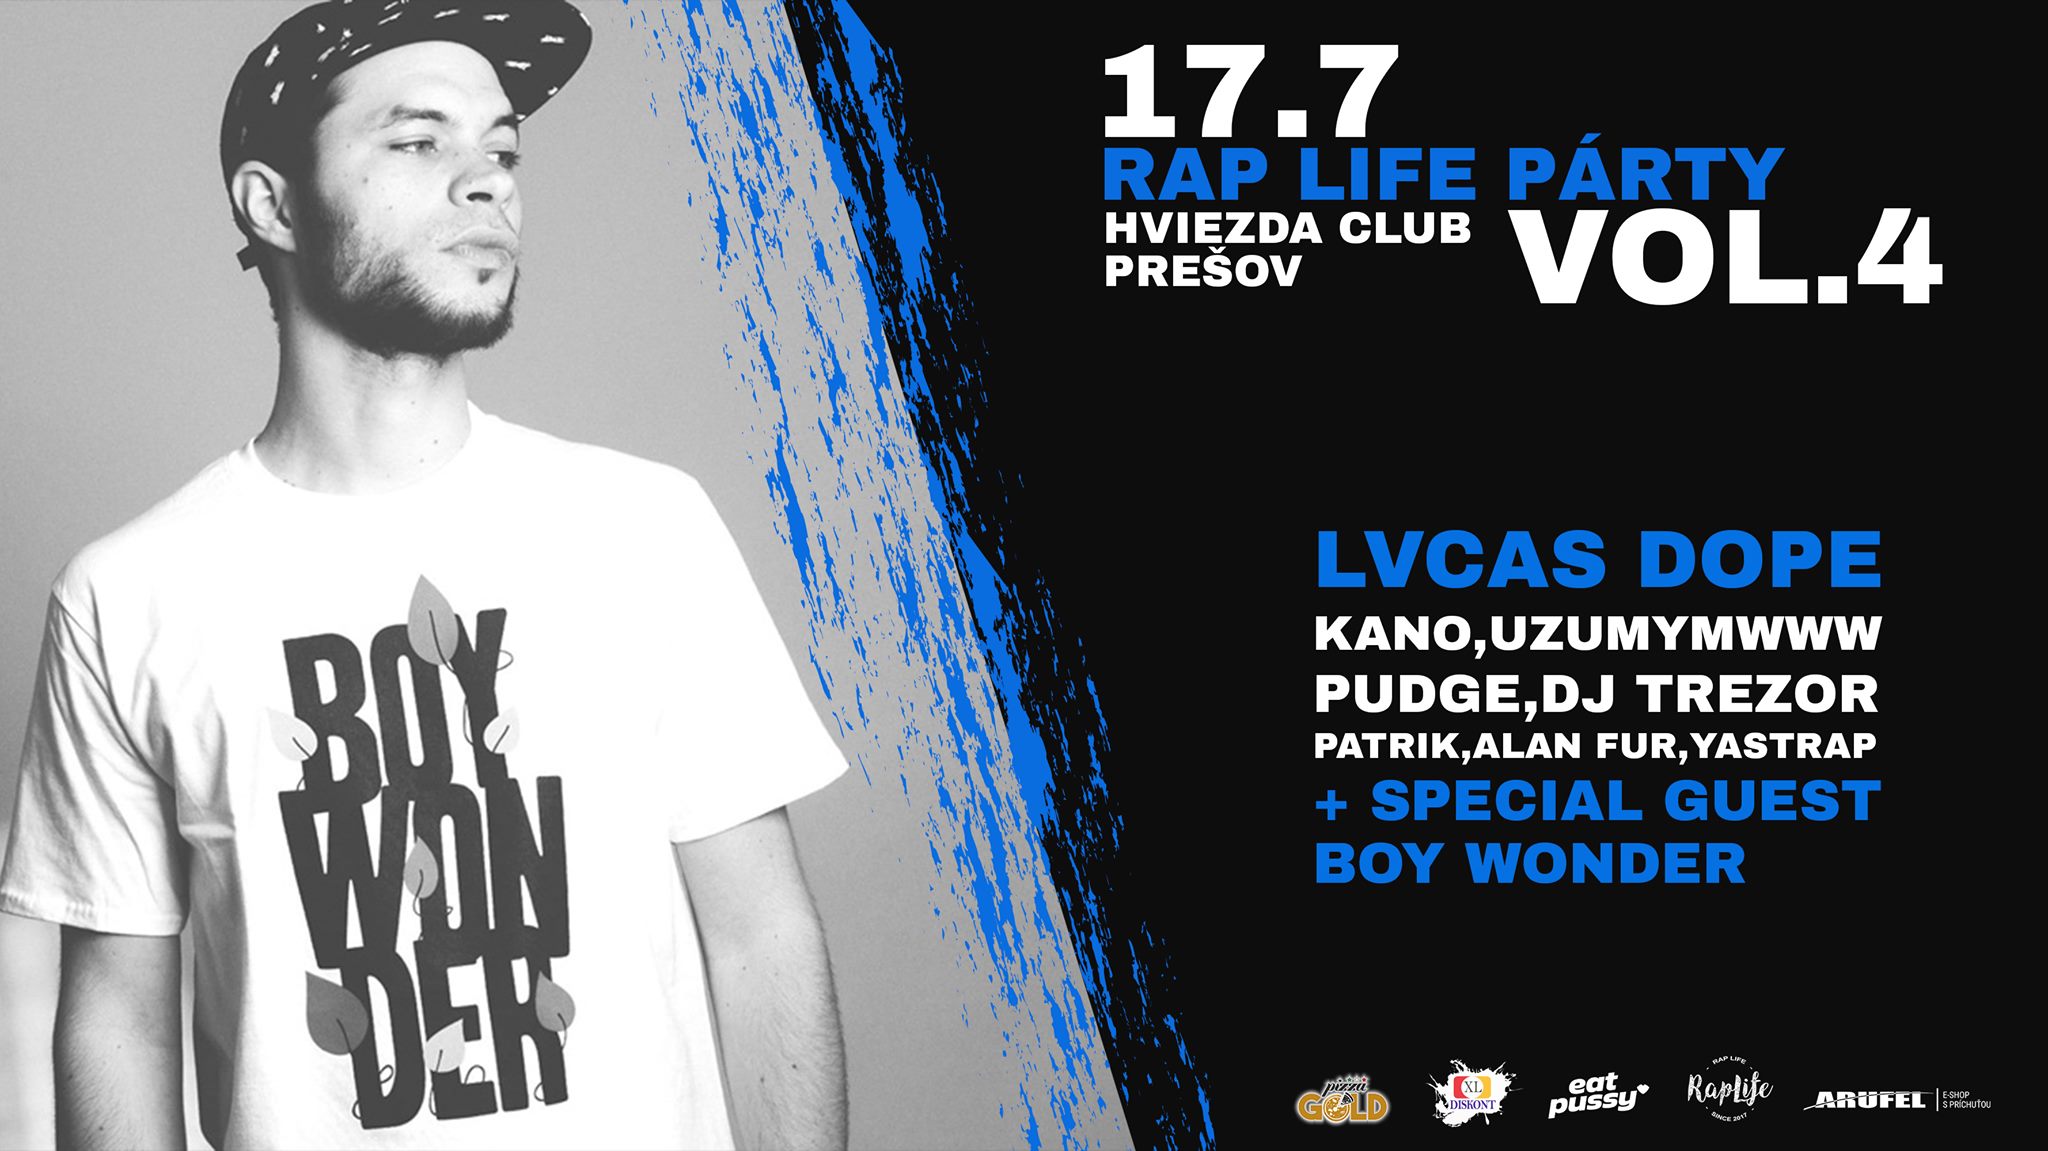 Rap Life Párty vol.4 w/Lvcas Dope,Boy Wonder + guest Hviezda Club